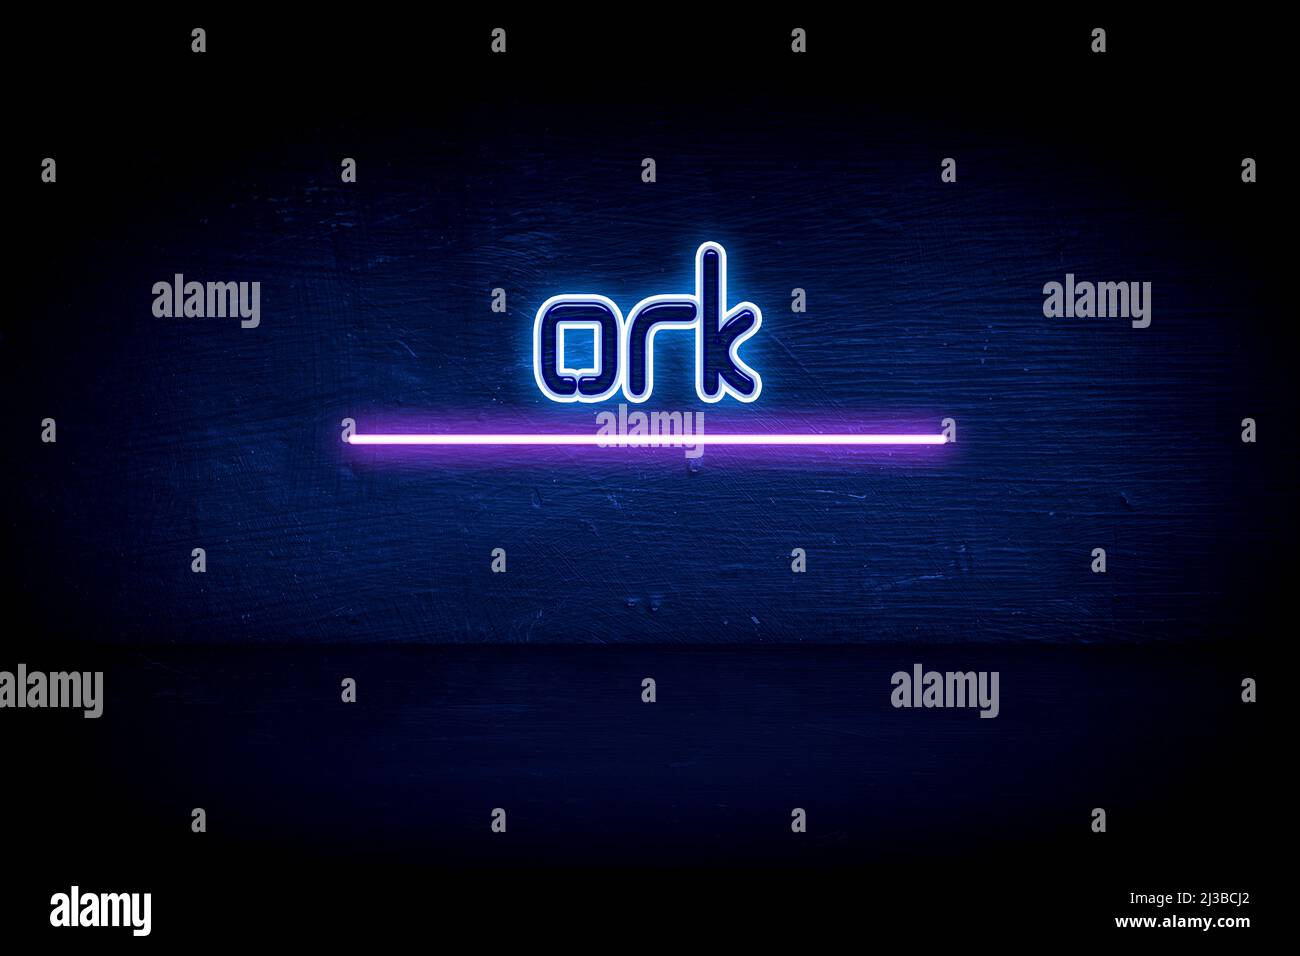 Ork - blue neon announcement signboard Stock Photo